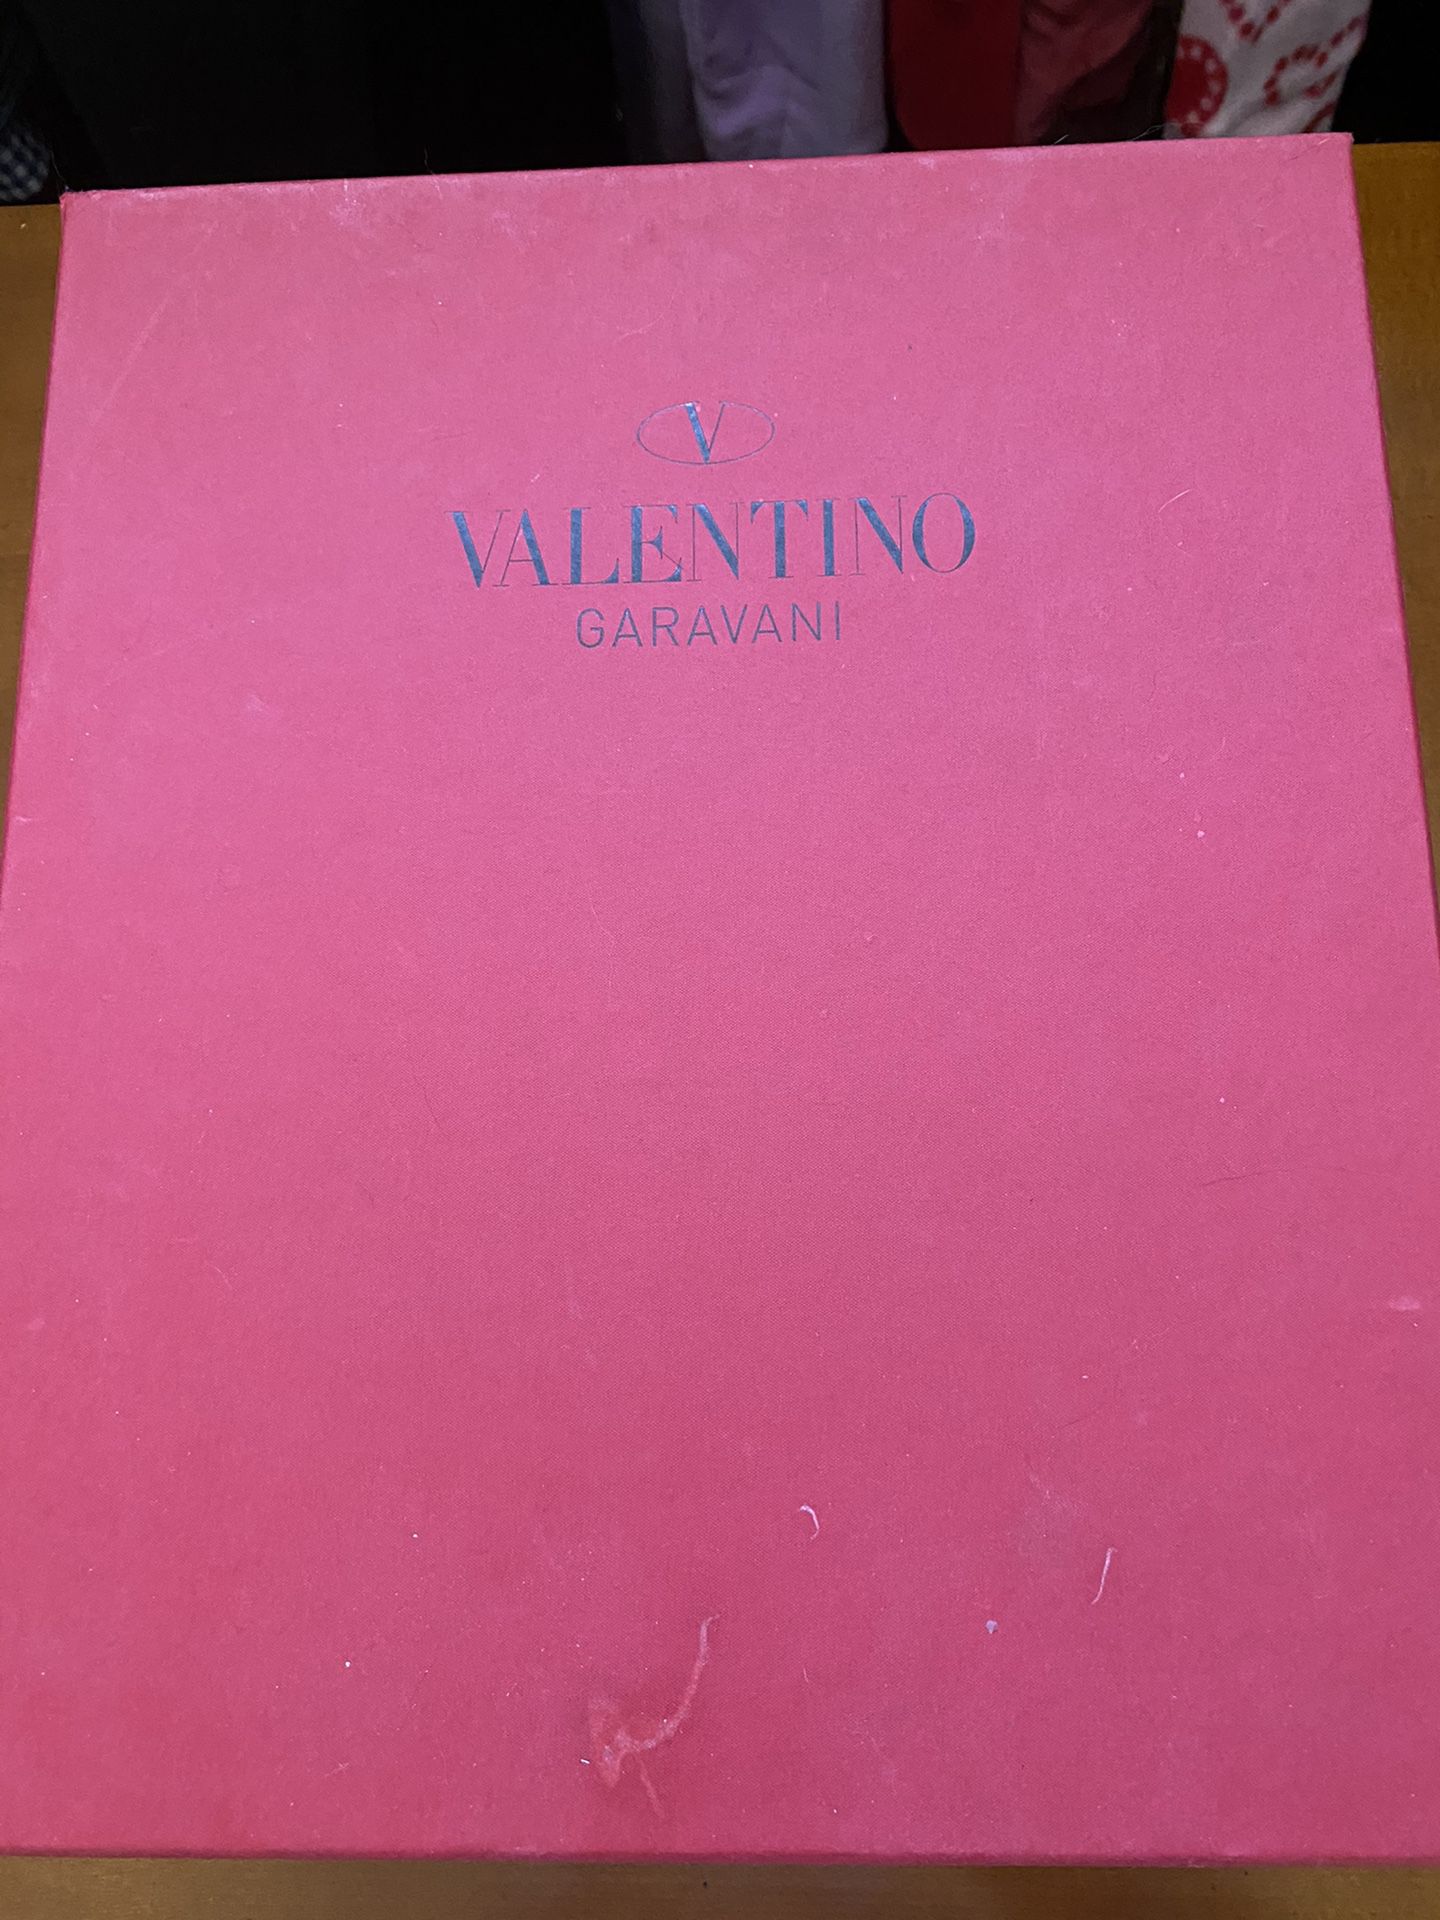 Valentino Authentic Wedges